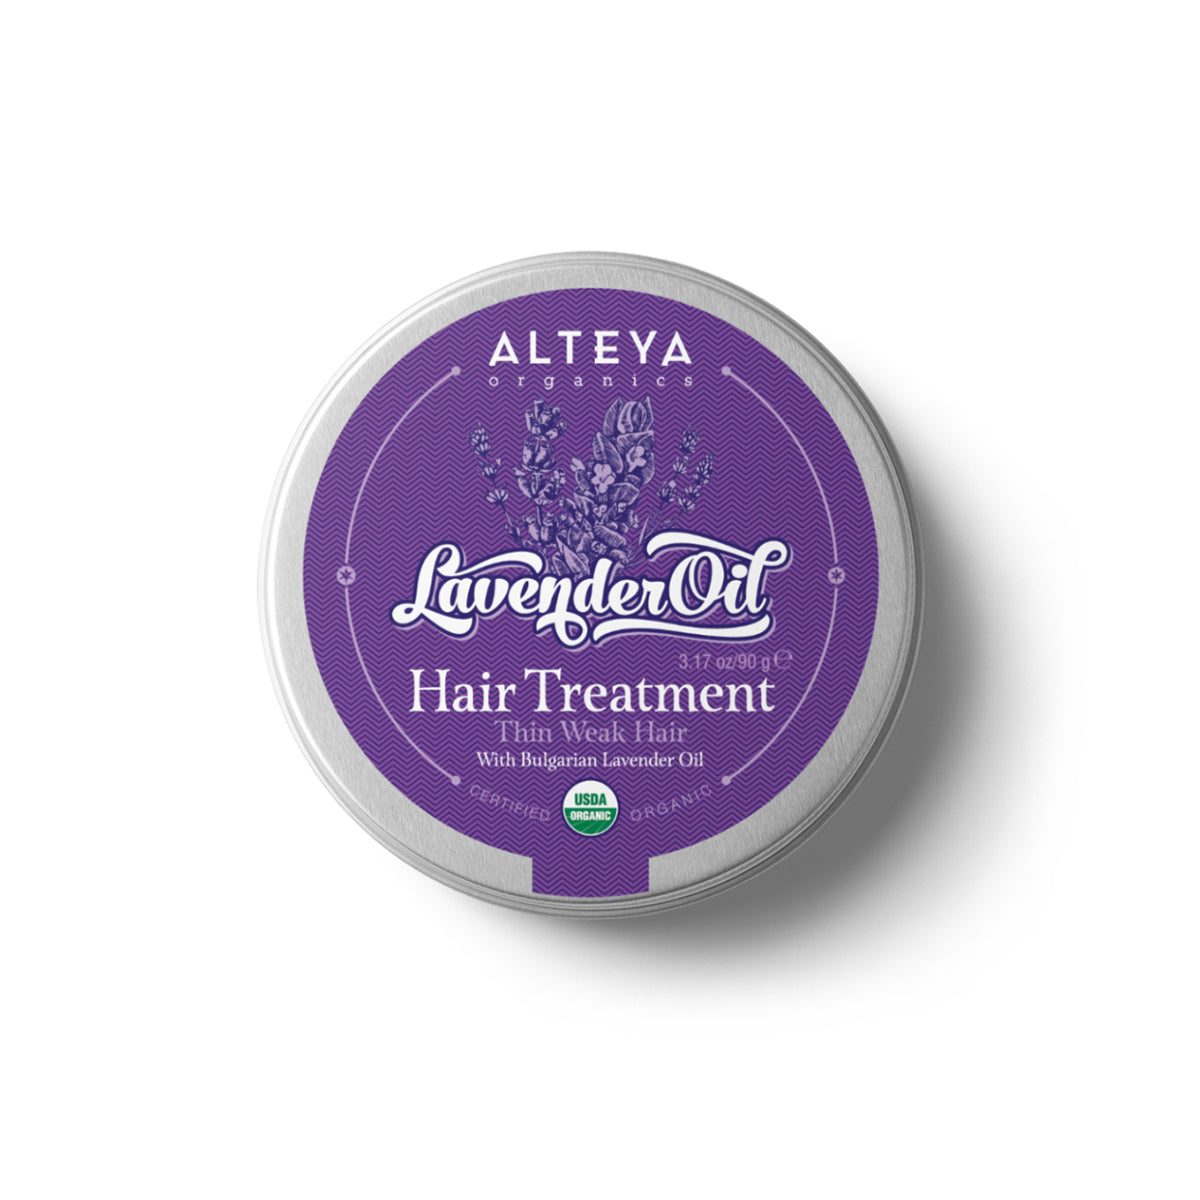 An Alteya Organics Hair Treatment Lavender Oil Thin Weak Hair Moisturizing is a nourishing hair treatment infused with lavender oil.